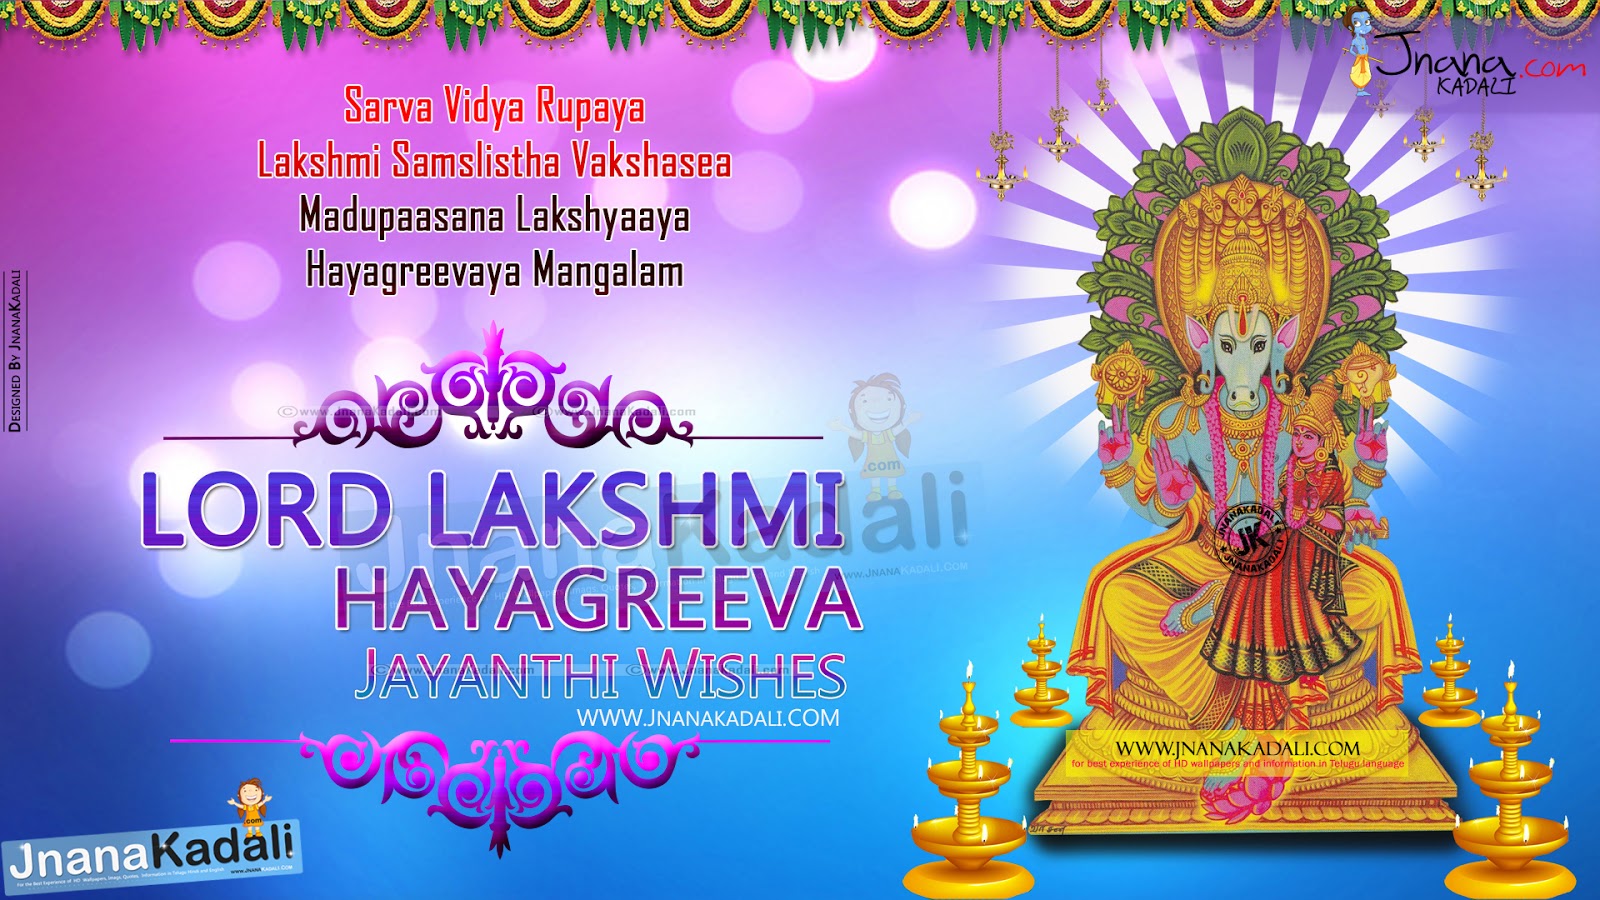 Sri Lakshmi Hayagreevar Photo Cut - GIFT ARTICLES - PHOTO CUT - Sri  Prarthana Enterprises Chennai